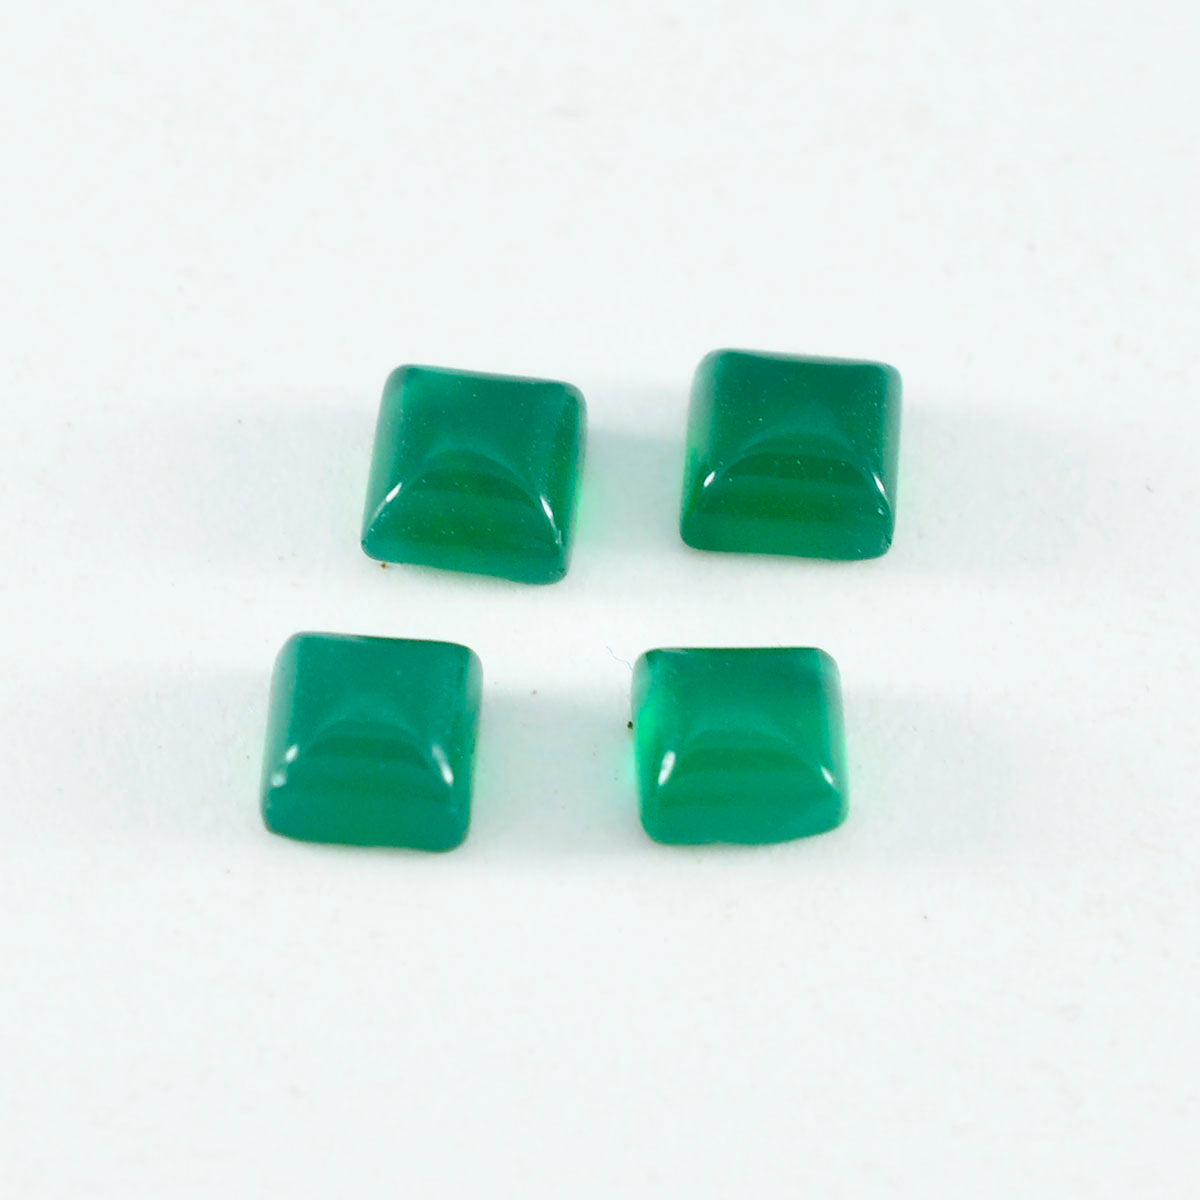 riyogems 1pc グリーン オニキス カボション 6x6 mm 正方形の形状の良質のルース宝石